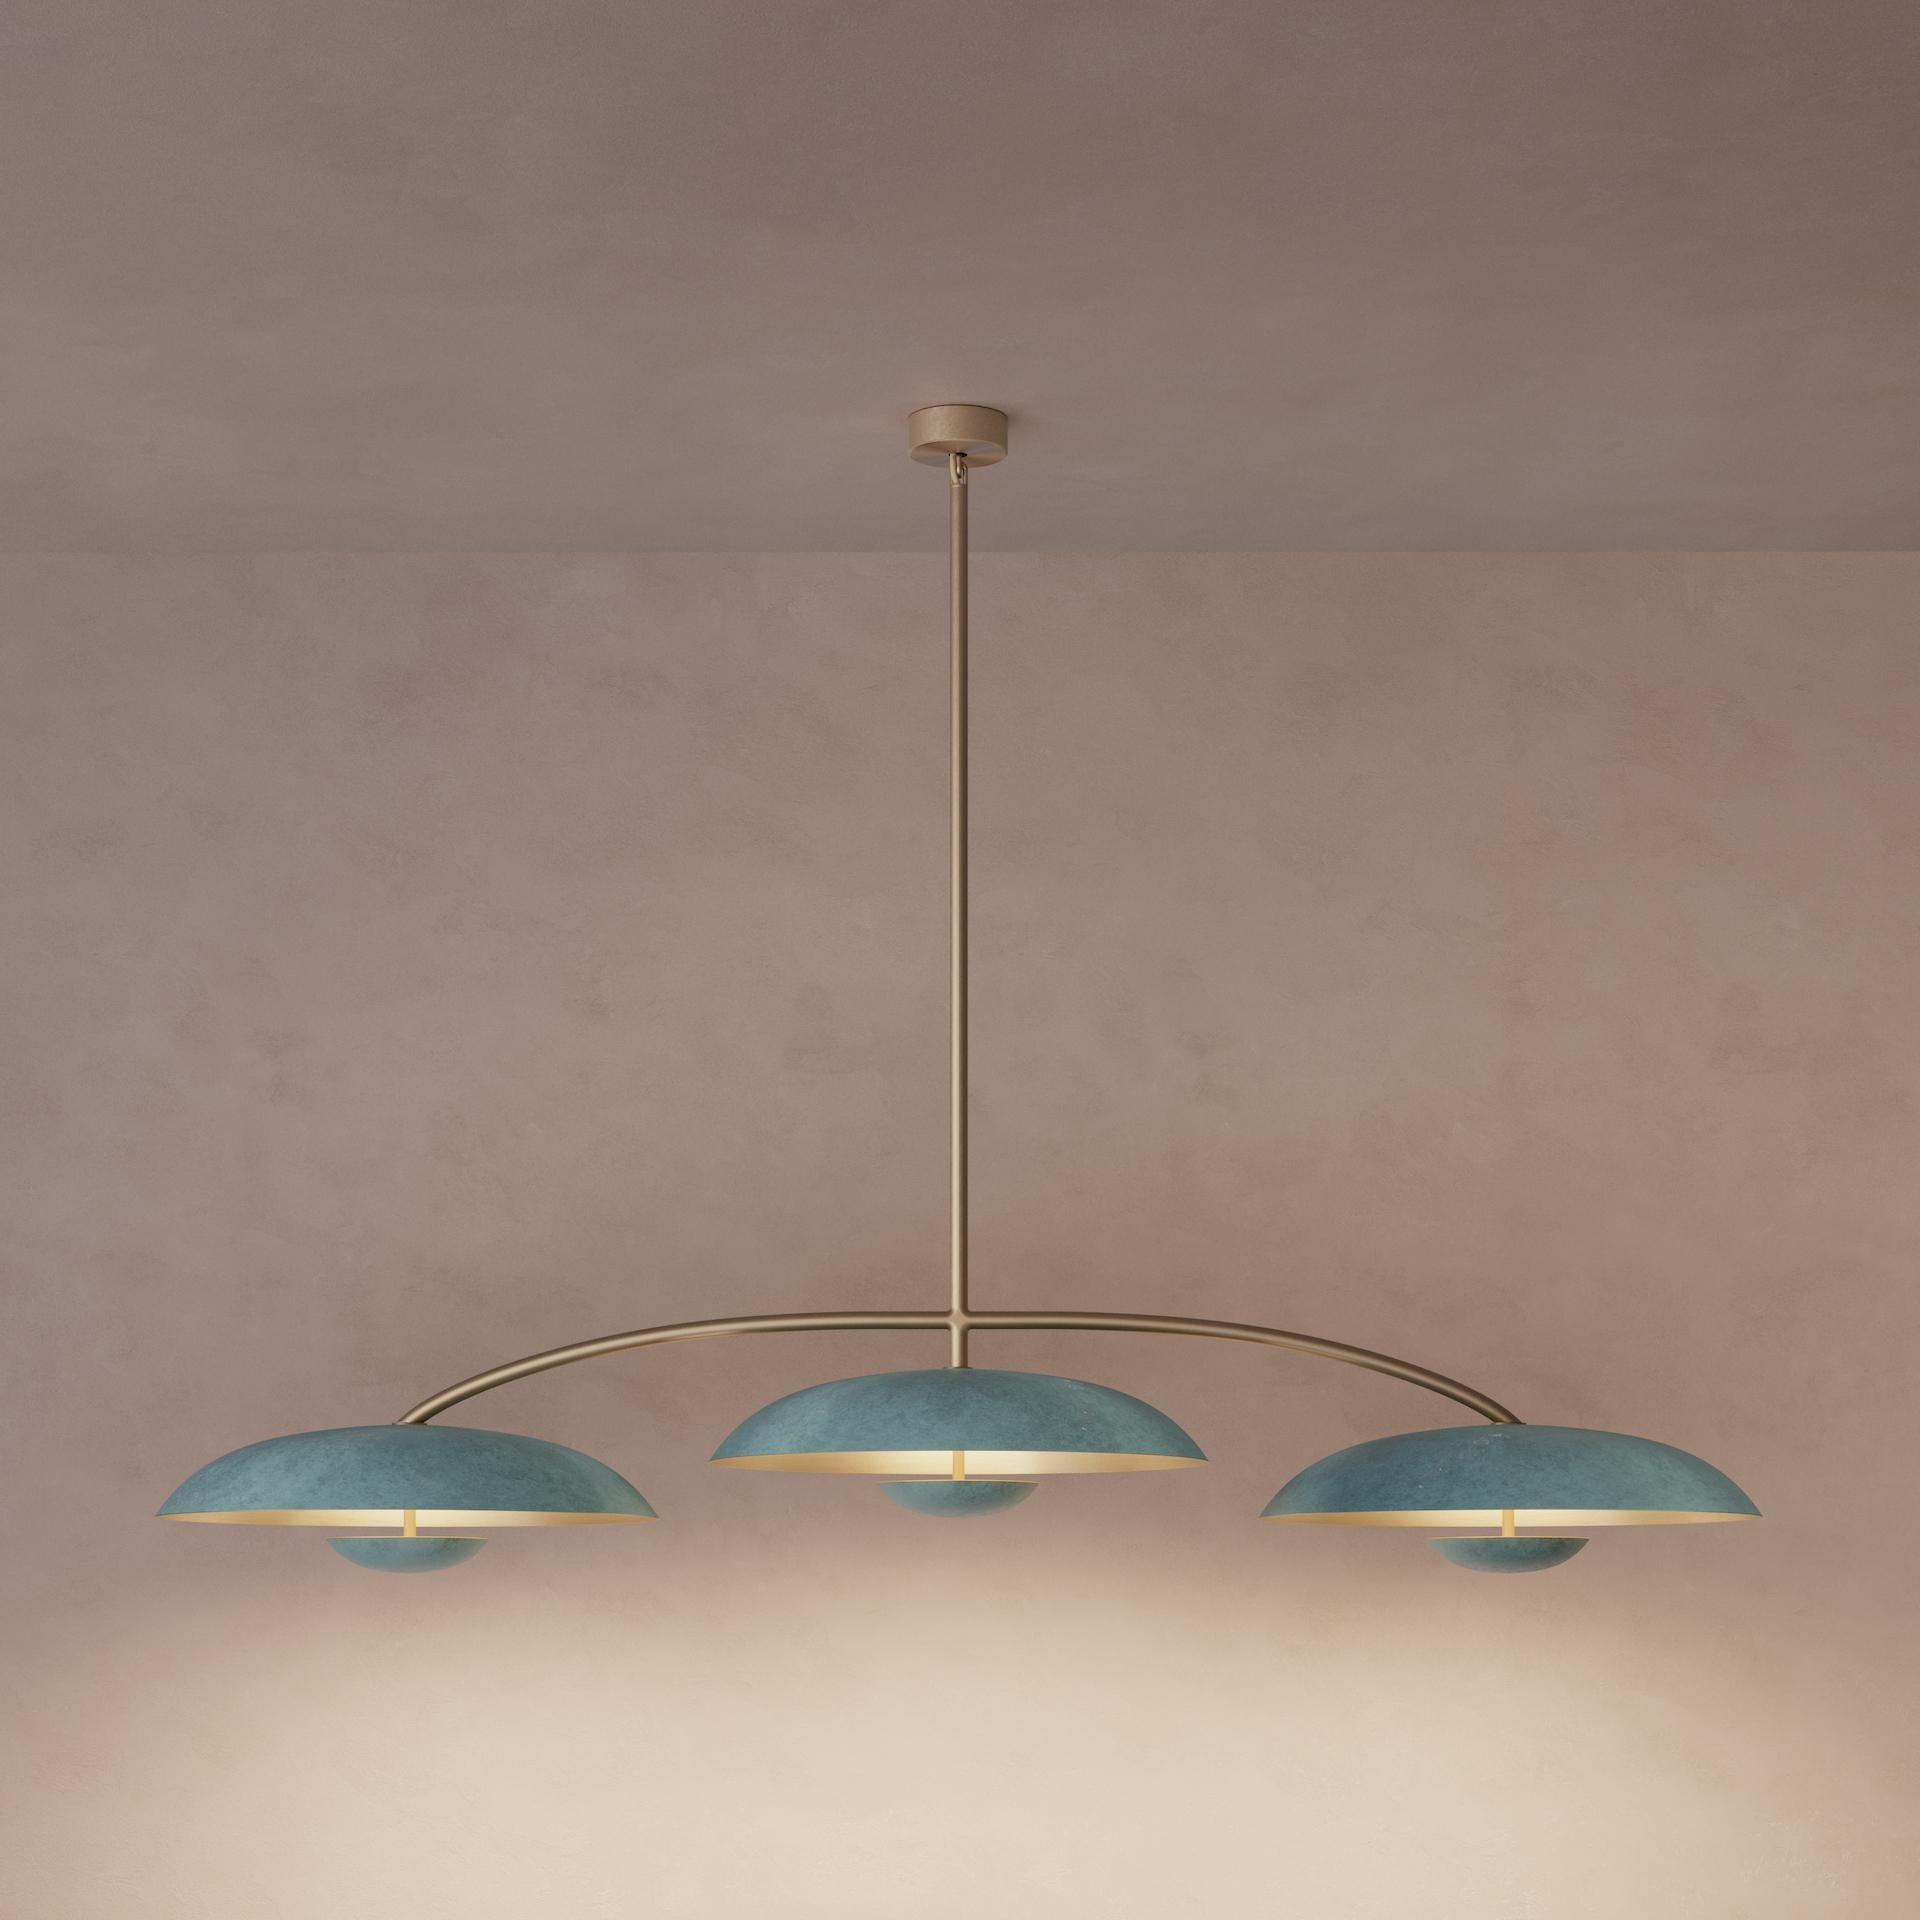 Post-Modern Orbit Trio Verdigris XL Ceiling Light by Atelier001